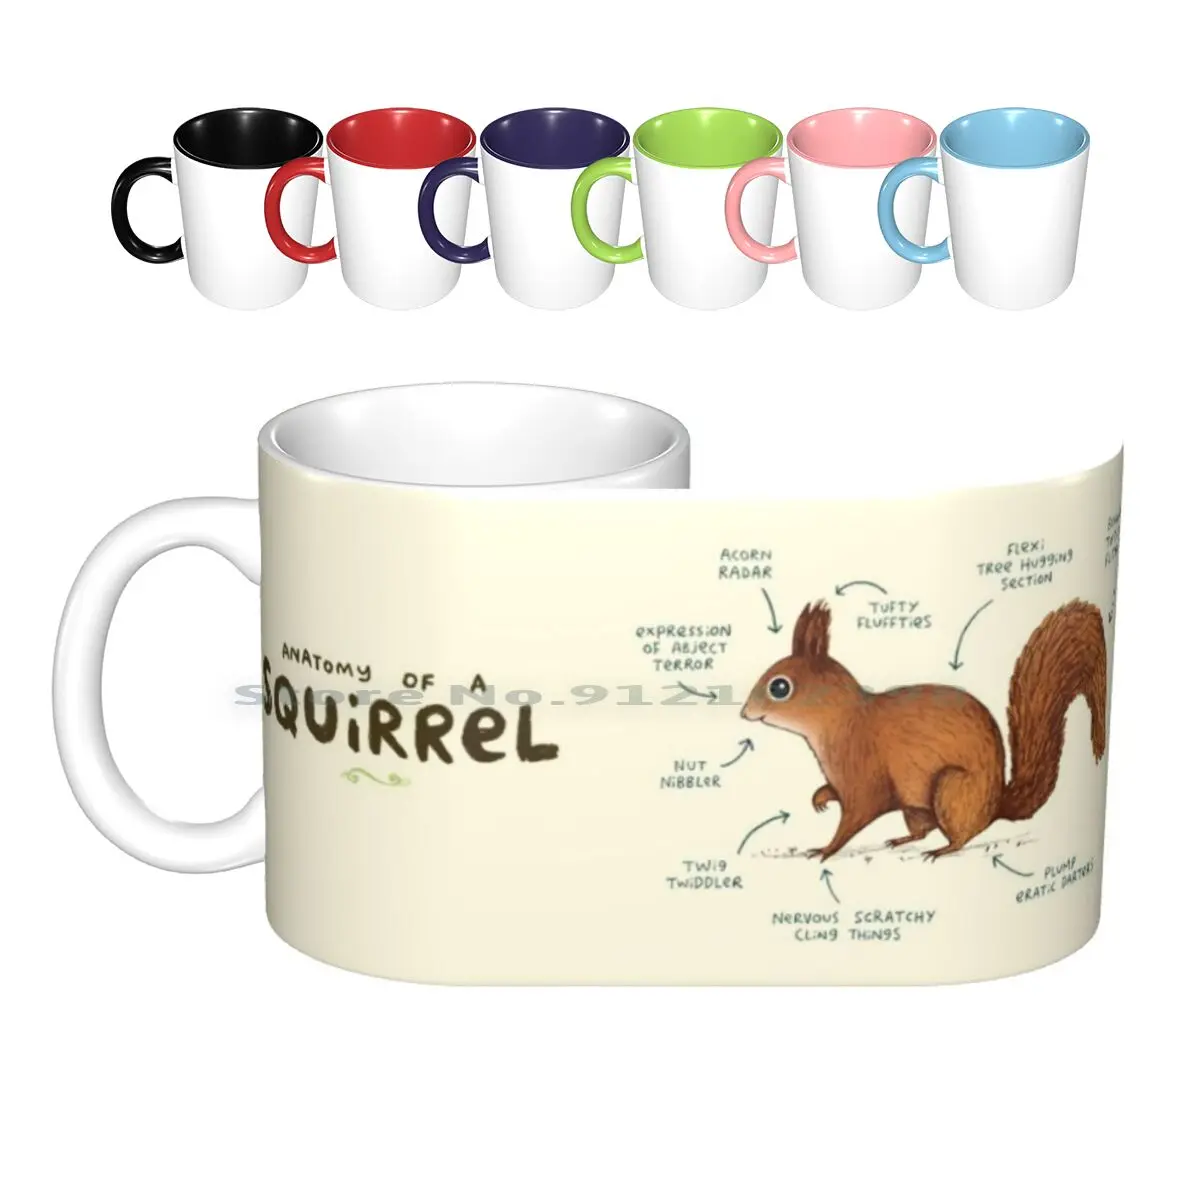 

Anatomy Of A Squirrel Ceramic Mugs Coffee Cups Milk Tea Mug Anatomy Squirrel Red British Tail Squirrels Chipmunk Ferret English